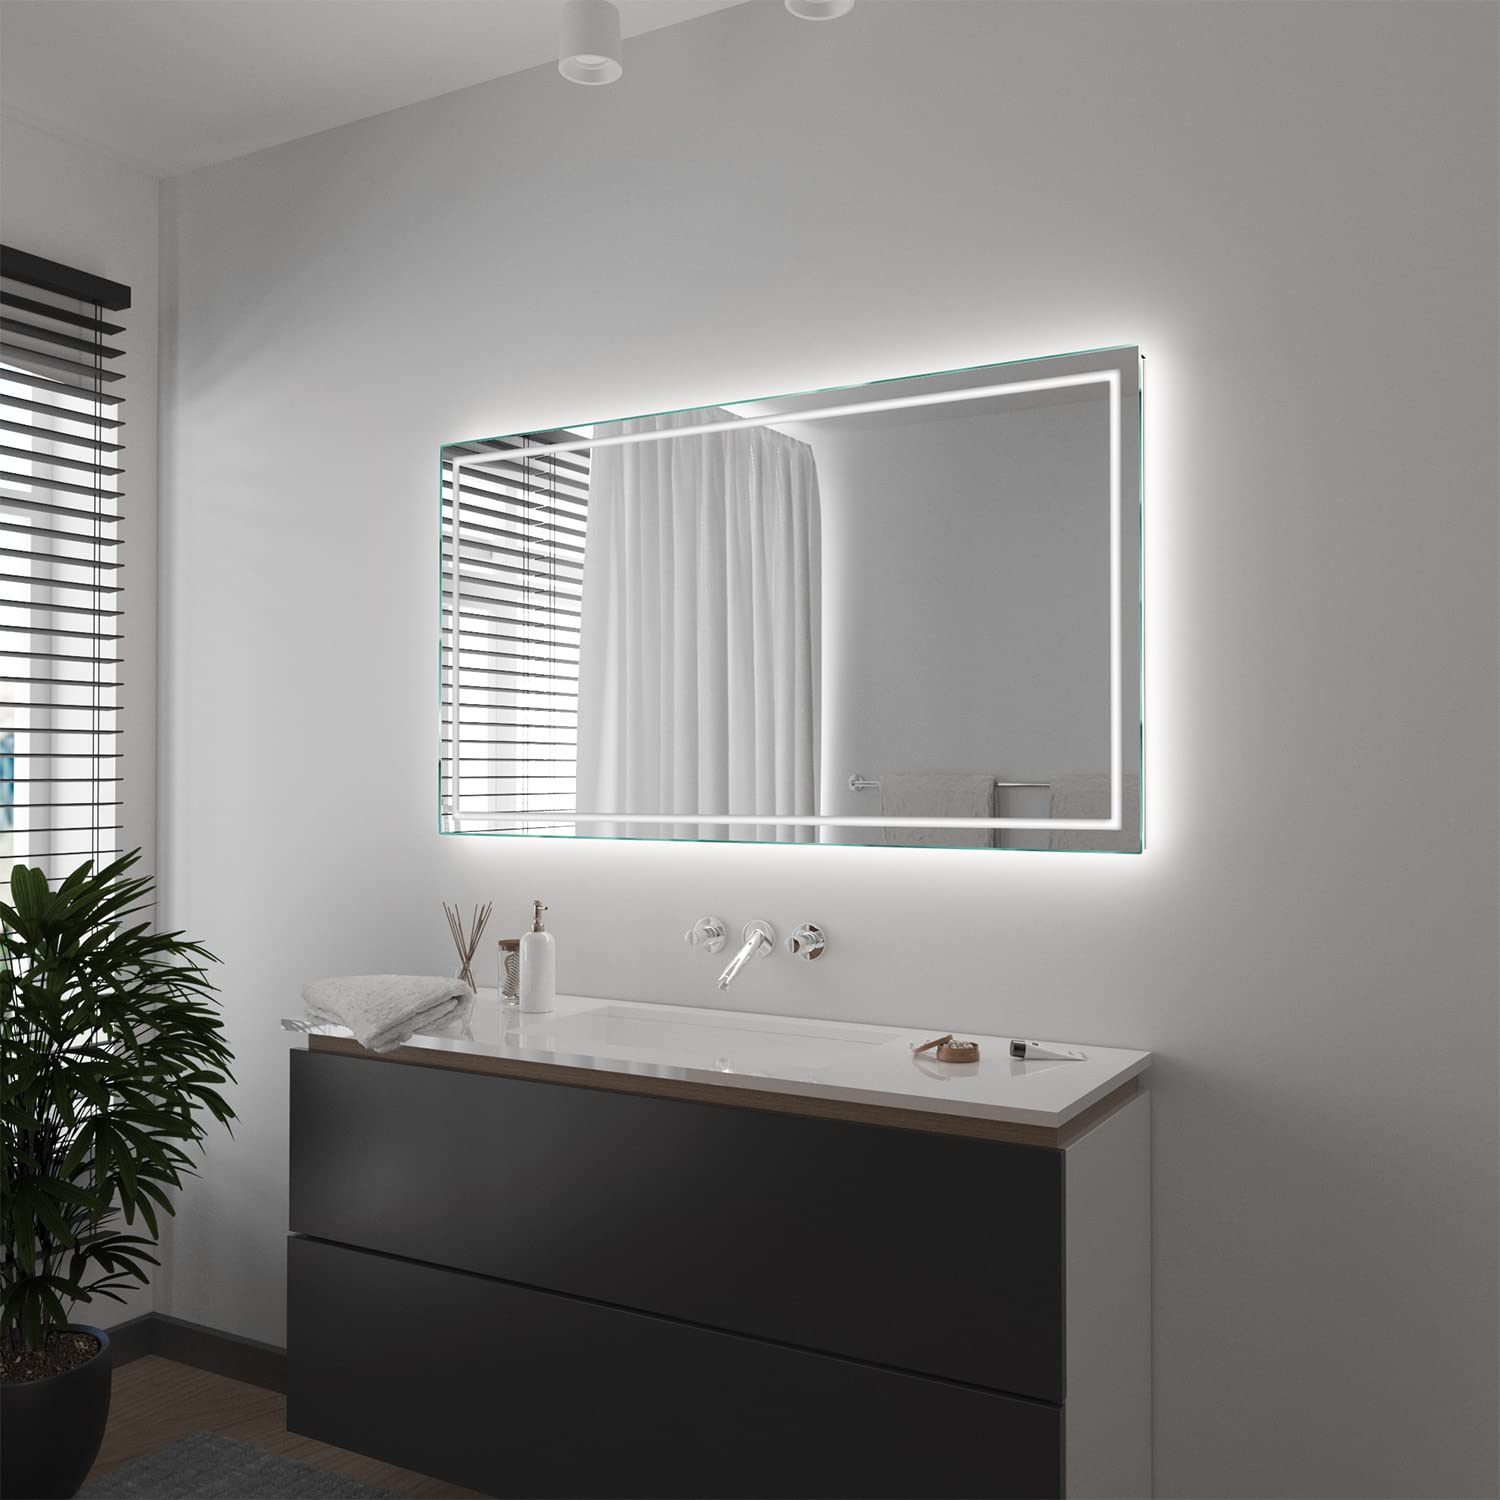 SARAR Wandspiegel mit rundum LED-Beleuchtung 140x70 cm Made in Germany Designo MA4114 Eckiger Badspiegel Spiegel mit Beleuchtung Badezimmerspiegel nach-auf Maß